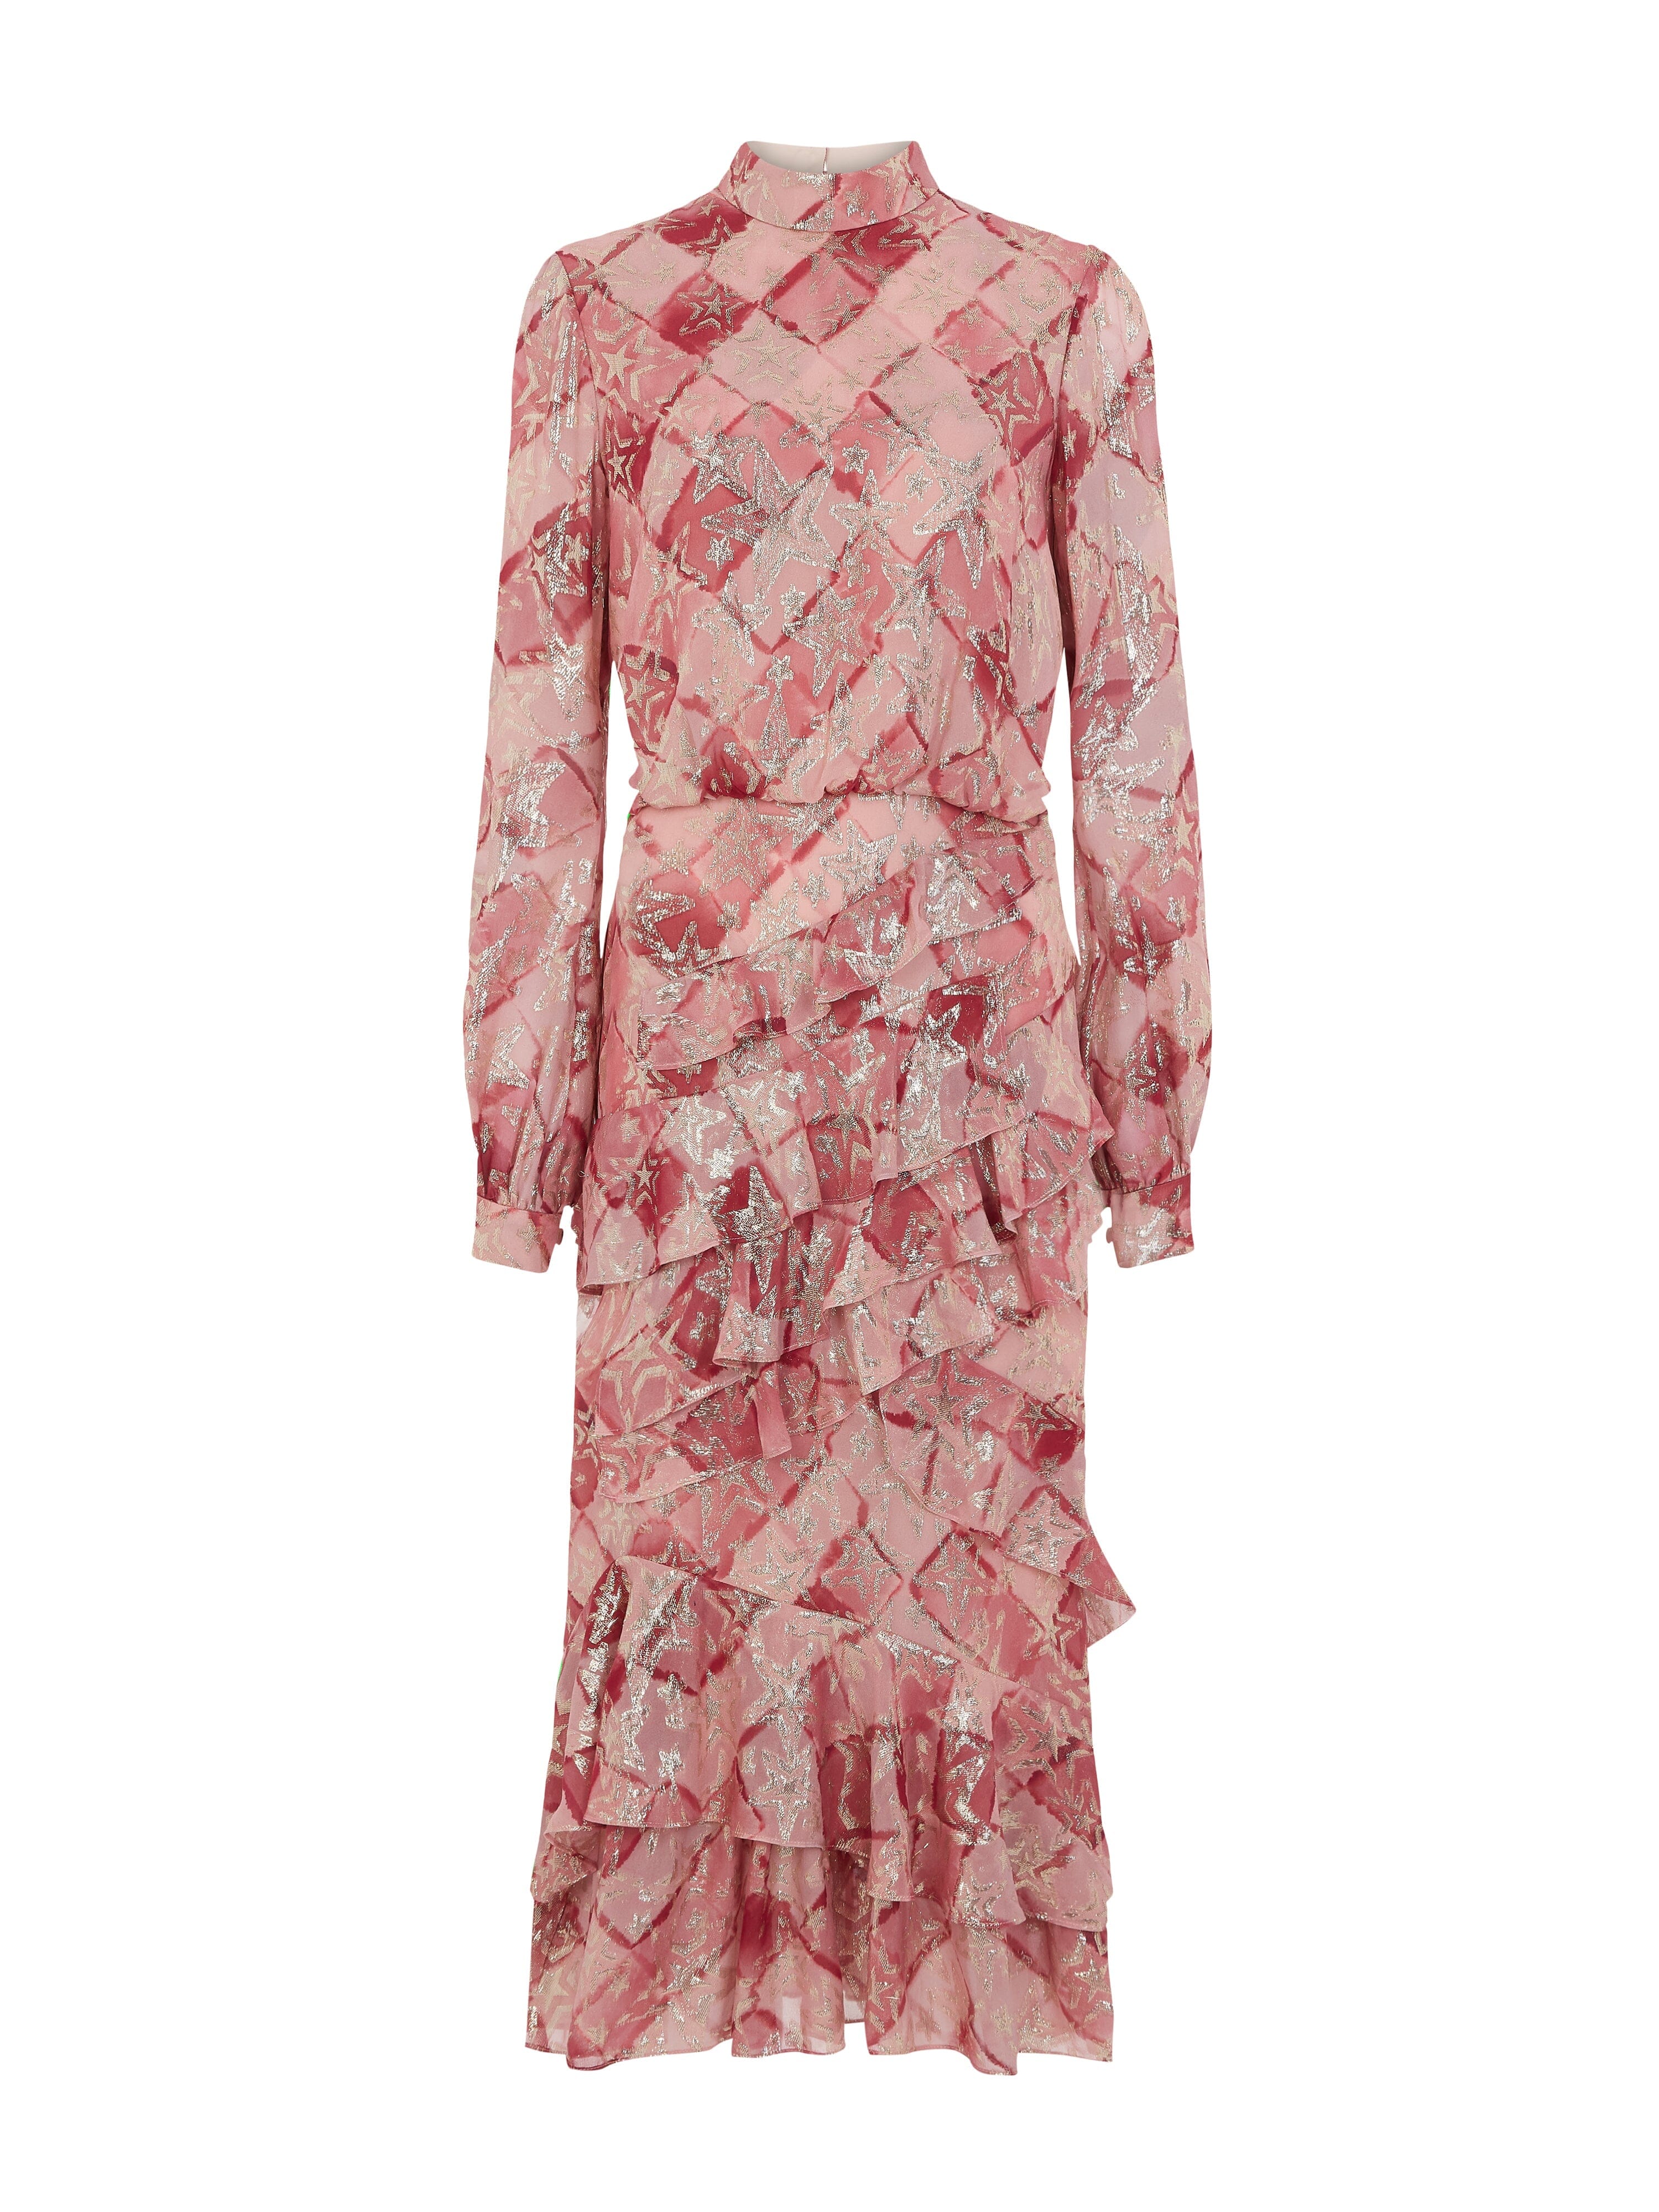 Isa Ruffle Dress in Rose Check print